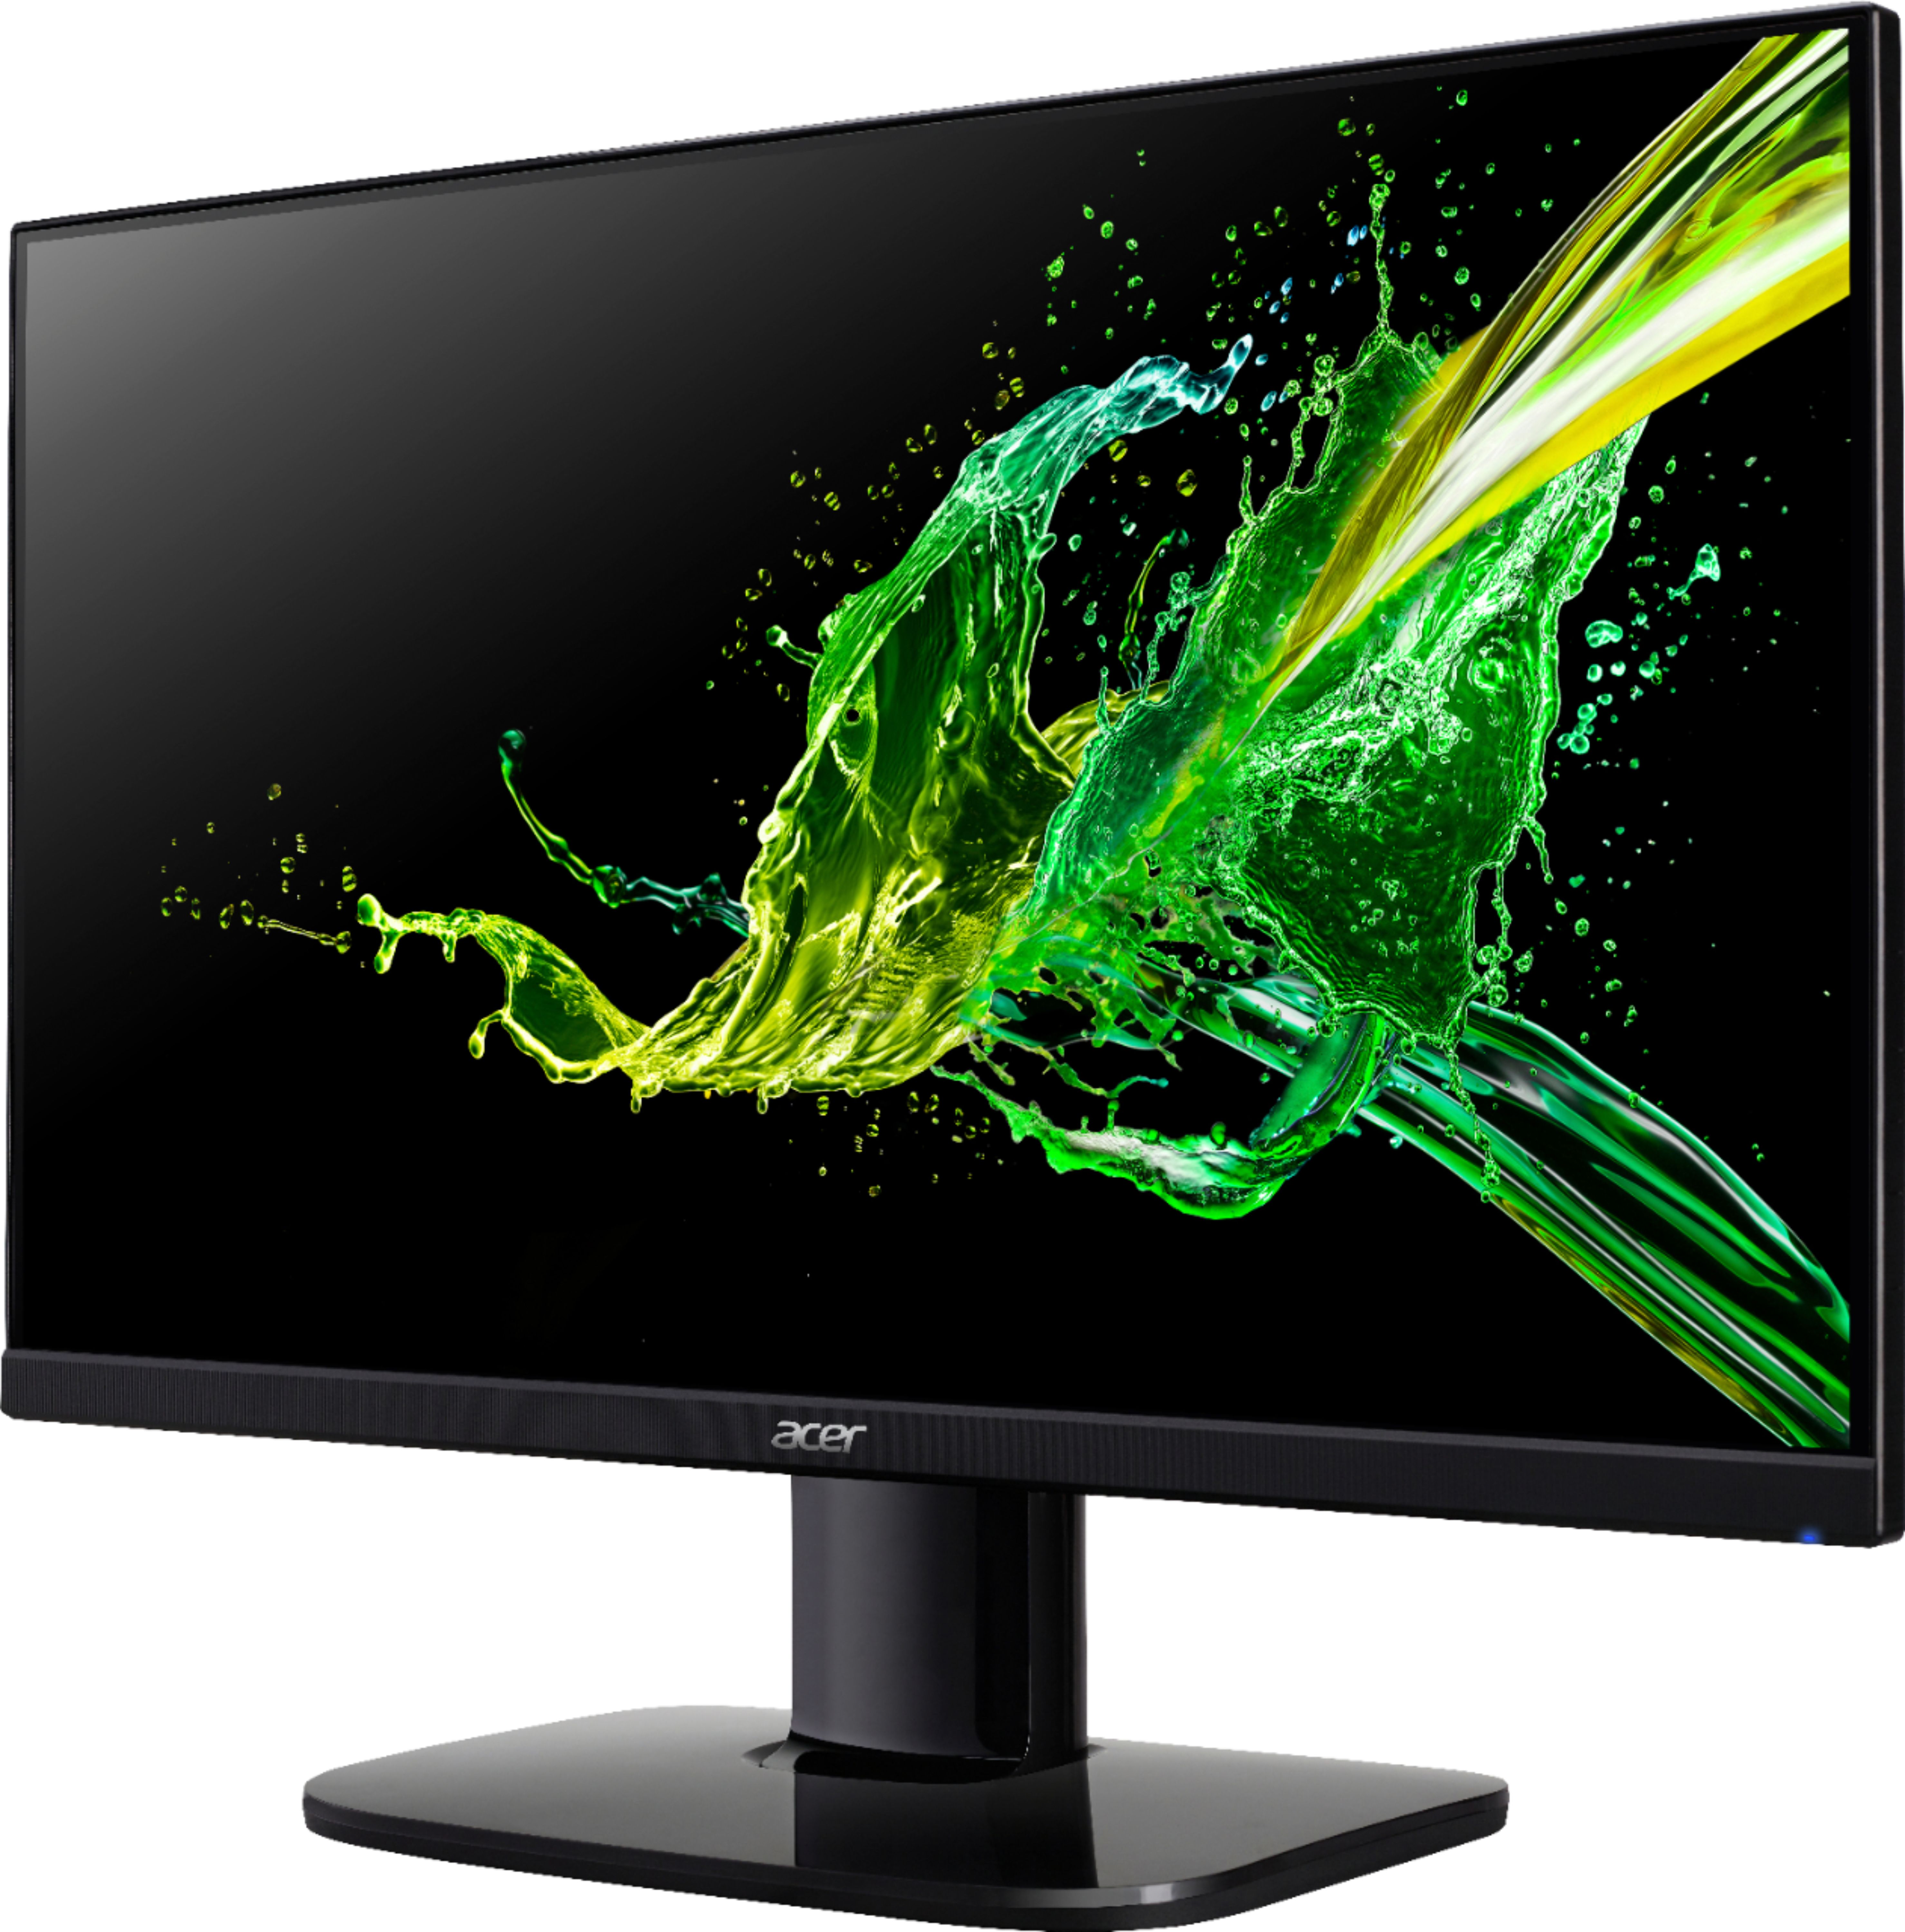 Left View: Acer ED3 - 27" Widescreen LCD Monitor Full HD 2560 x 1440 5ms 144 Hz 250 Nit (VA) | ED273UR Pbidpx - Refurbished